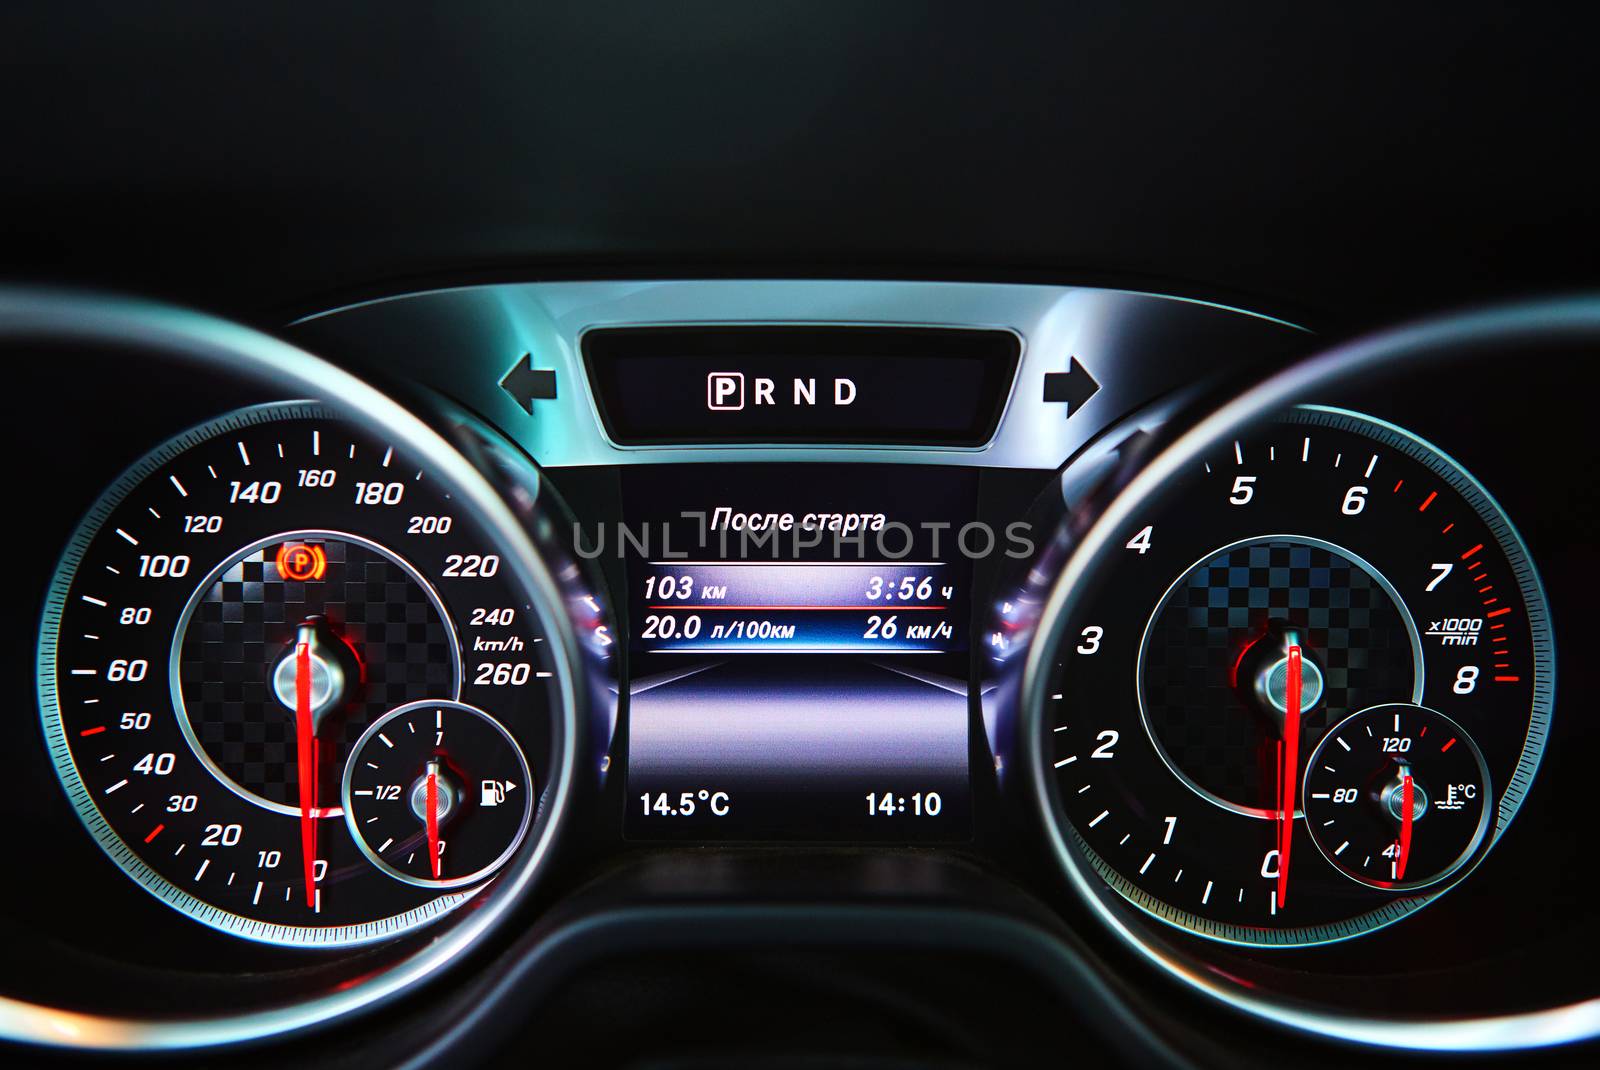 Modern car speedometer. Close up shot of the dashboard a car